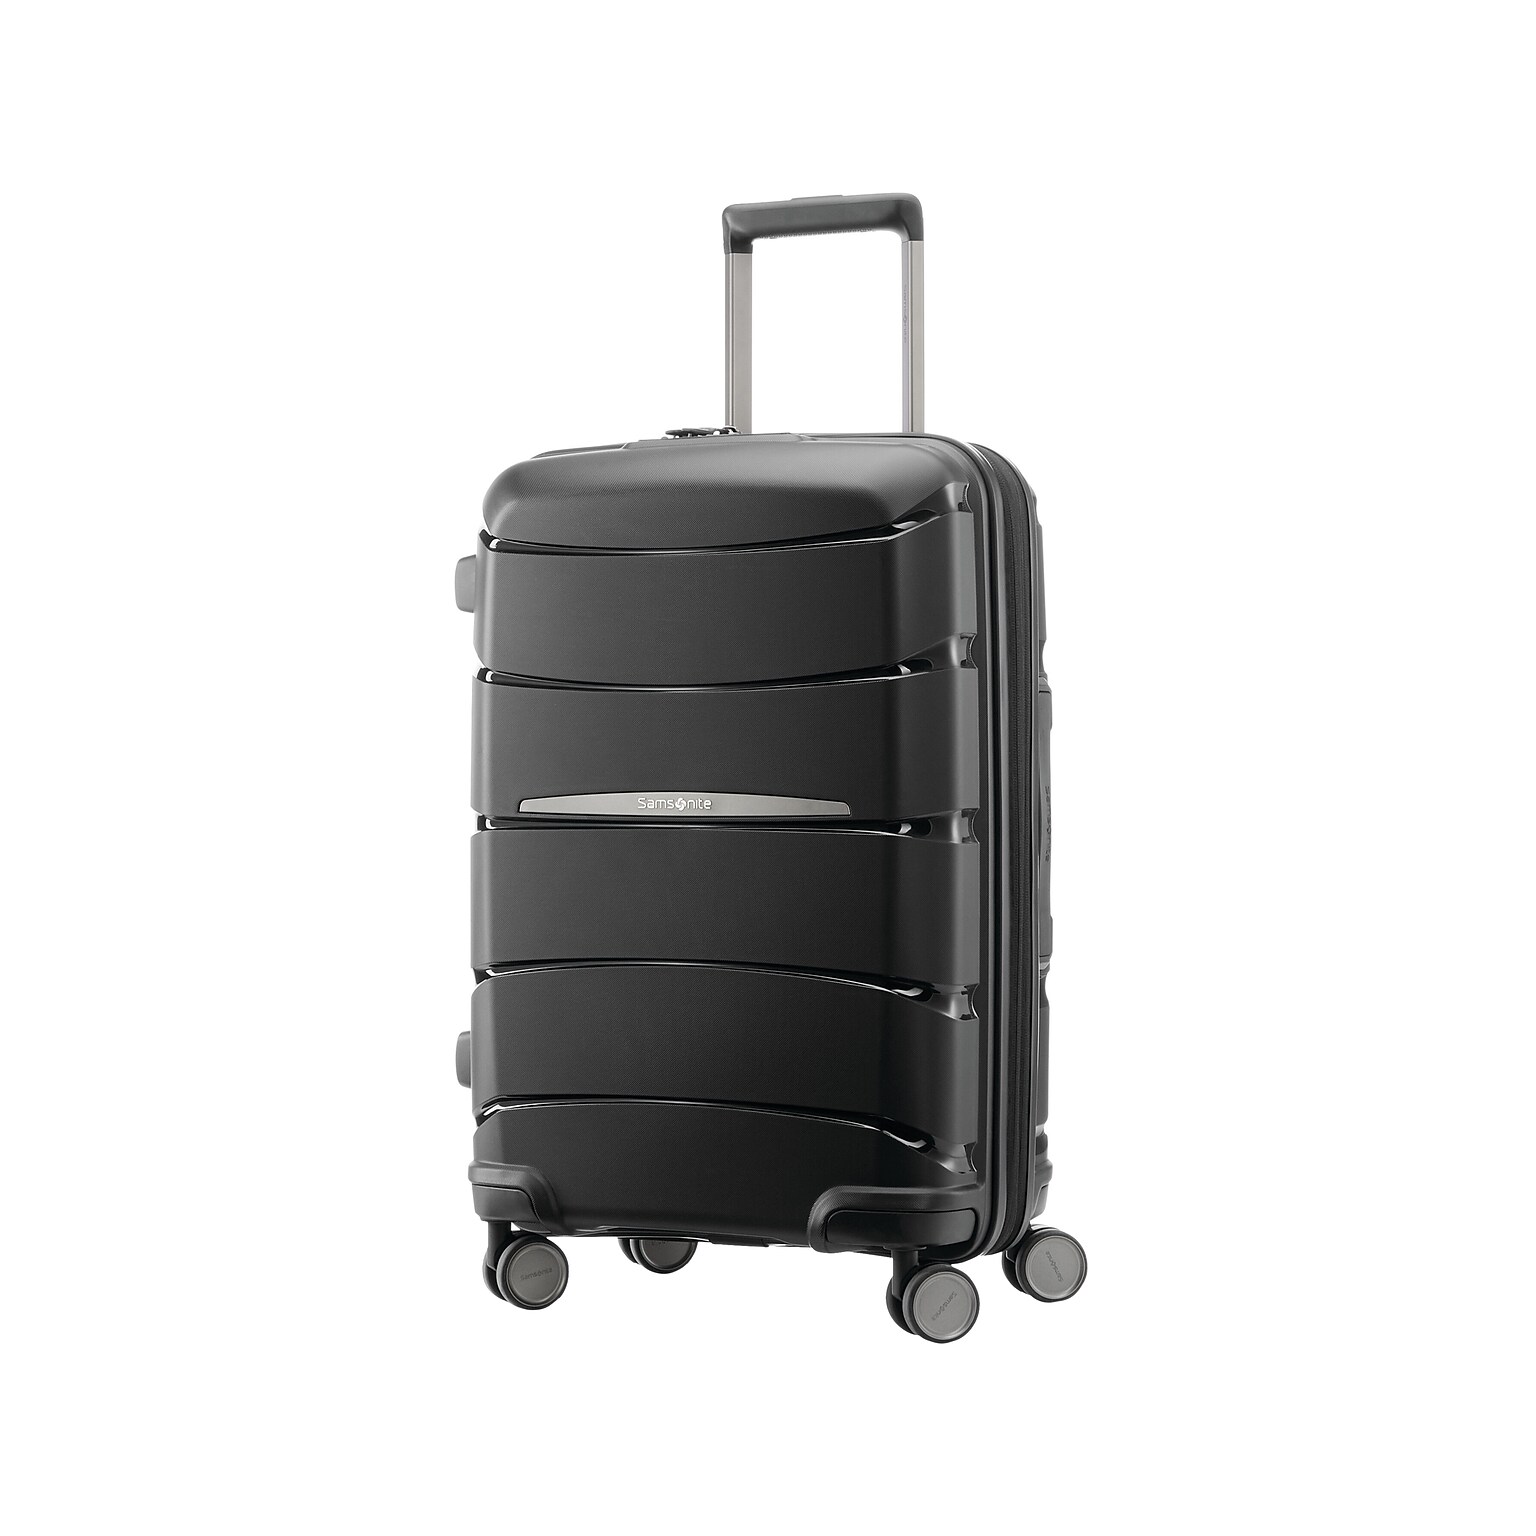 Samsonite Outline Pro 23 Hardside Carry-On Suitcase, 4-Wheeled Spinner, TSA Checkpoint Friendly, Midnight Black (137393-1548)